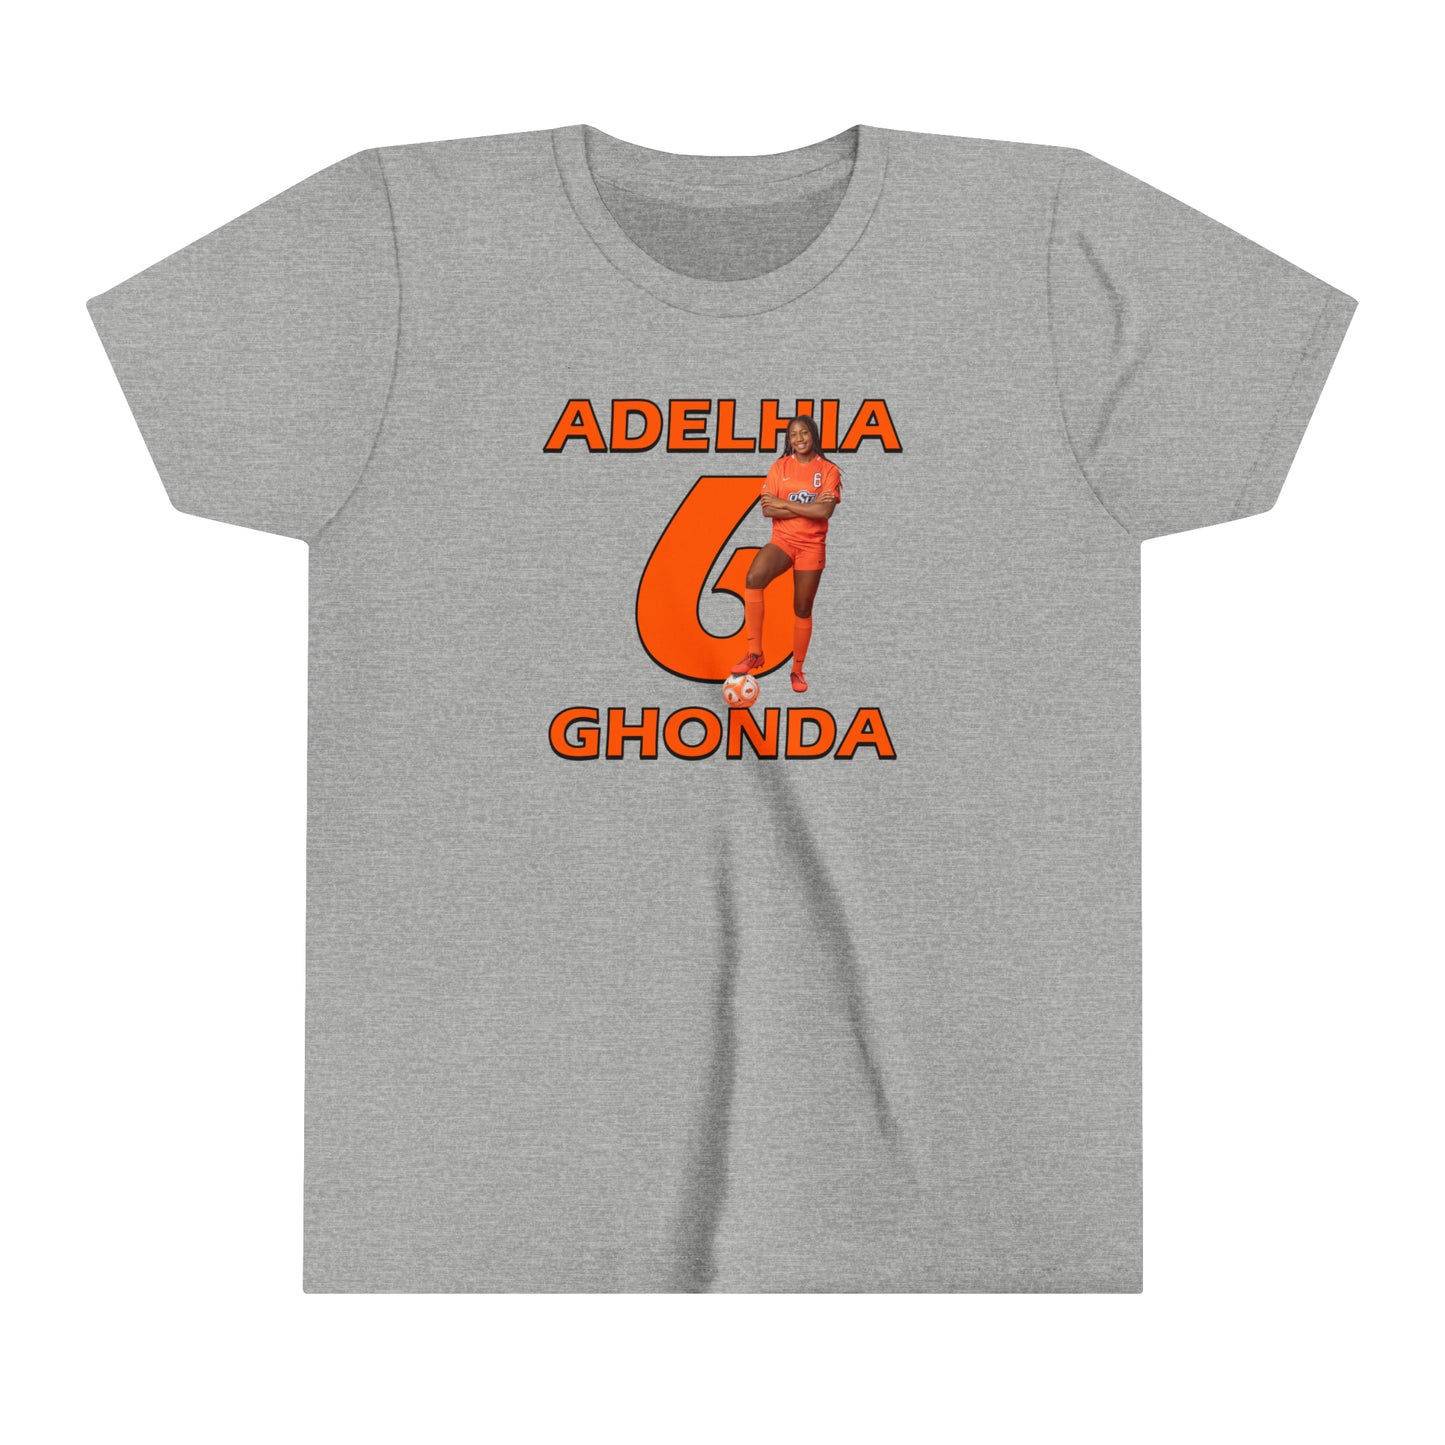 Adelhia Ghonda Youth T-Shirt